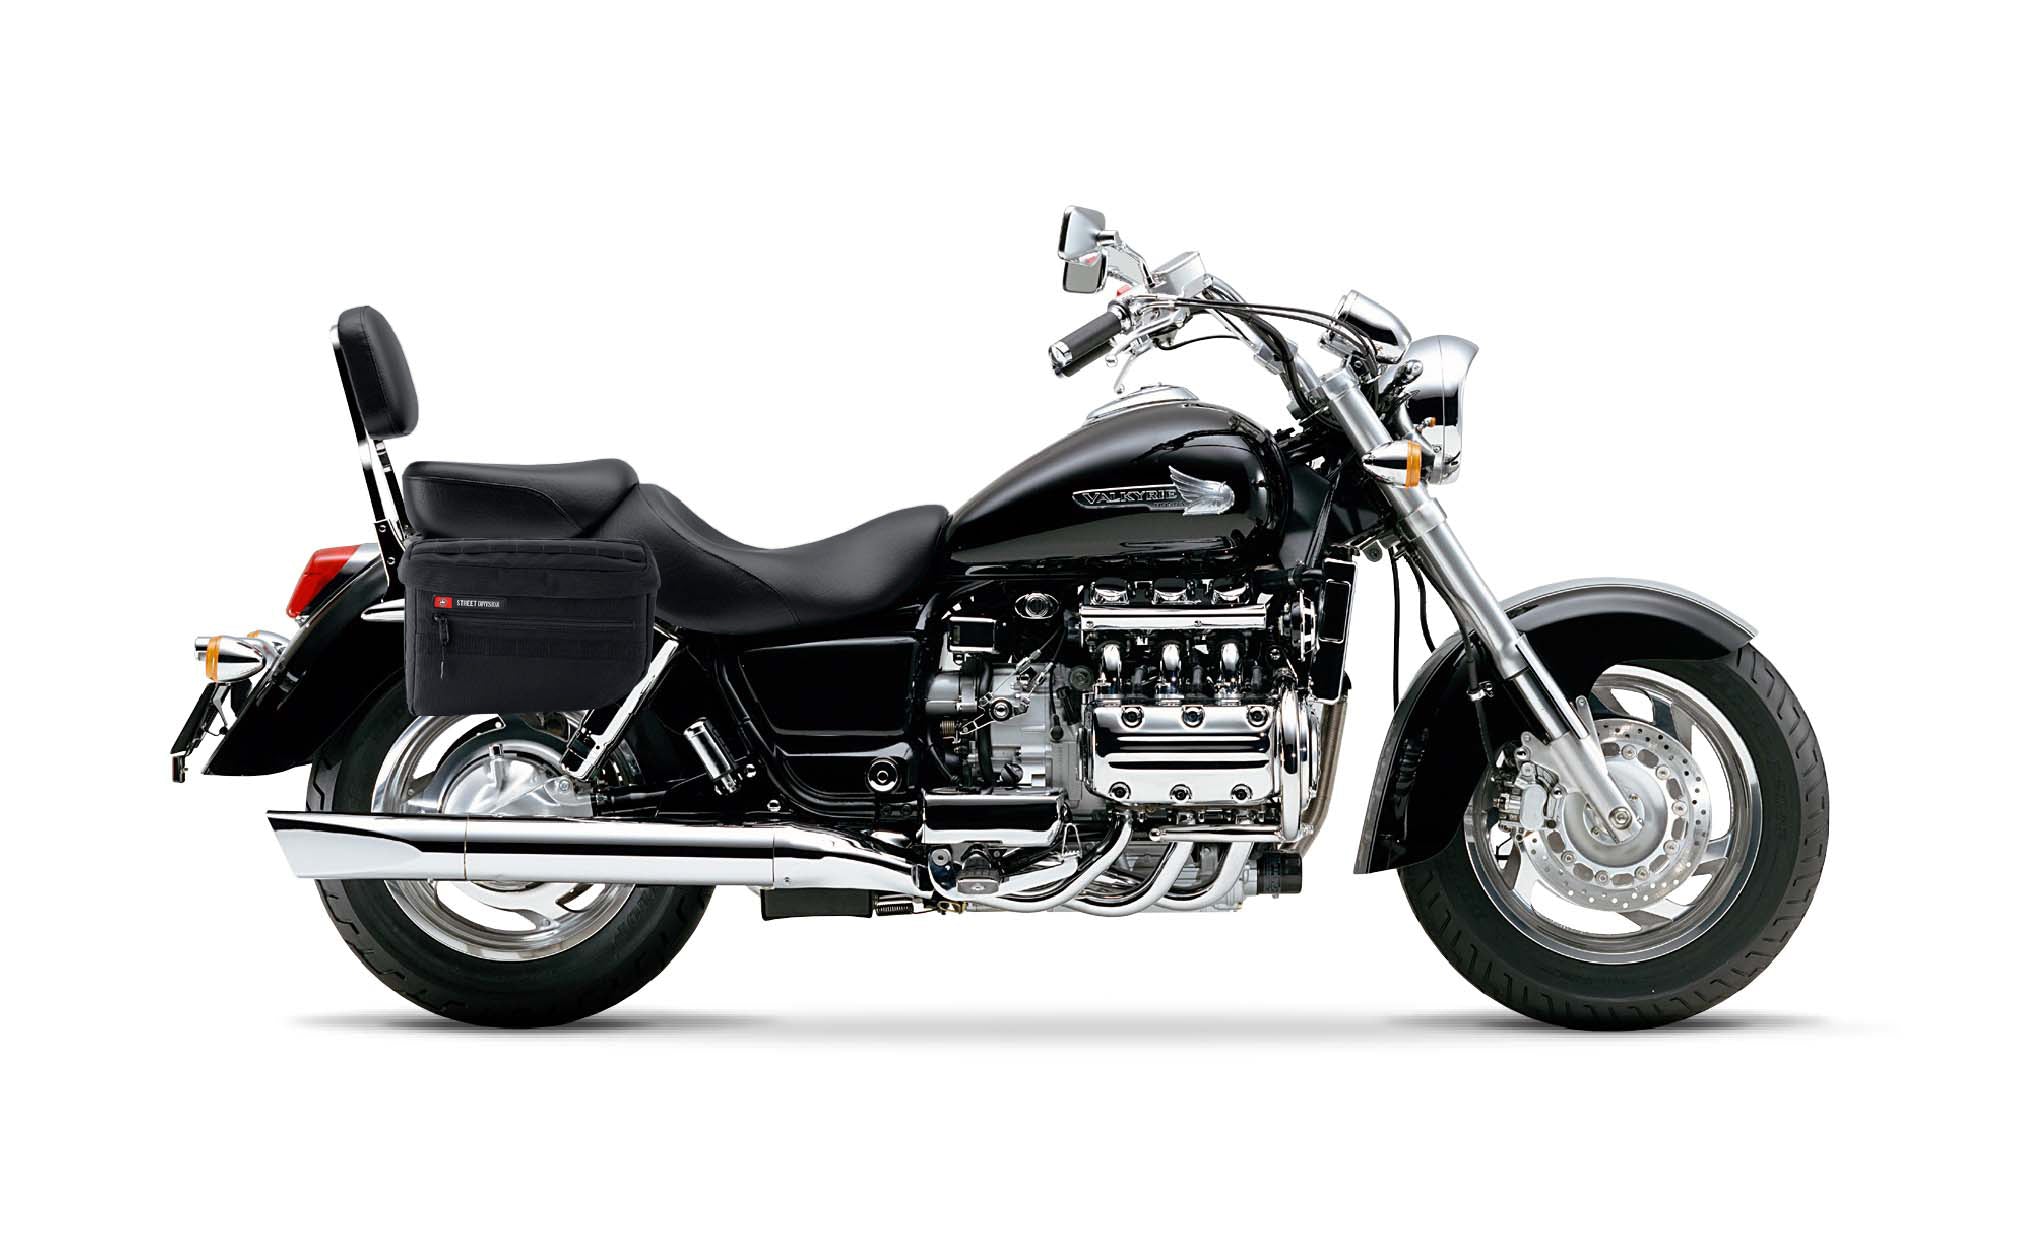 Viking Patriot Large Honda 1500 Valkyrie Standard Motorcycle Throw Over Saddlebags on Bike Photo @expand